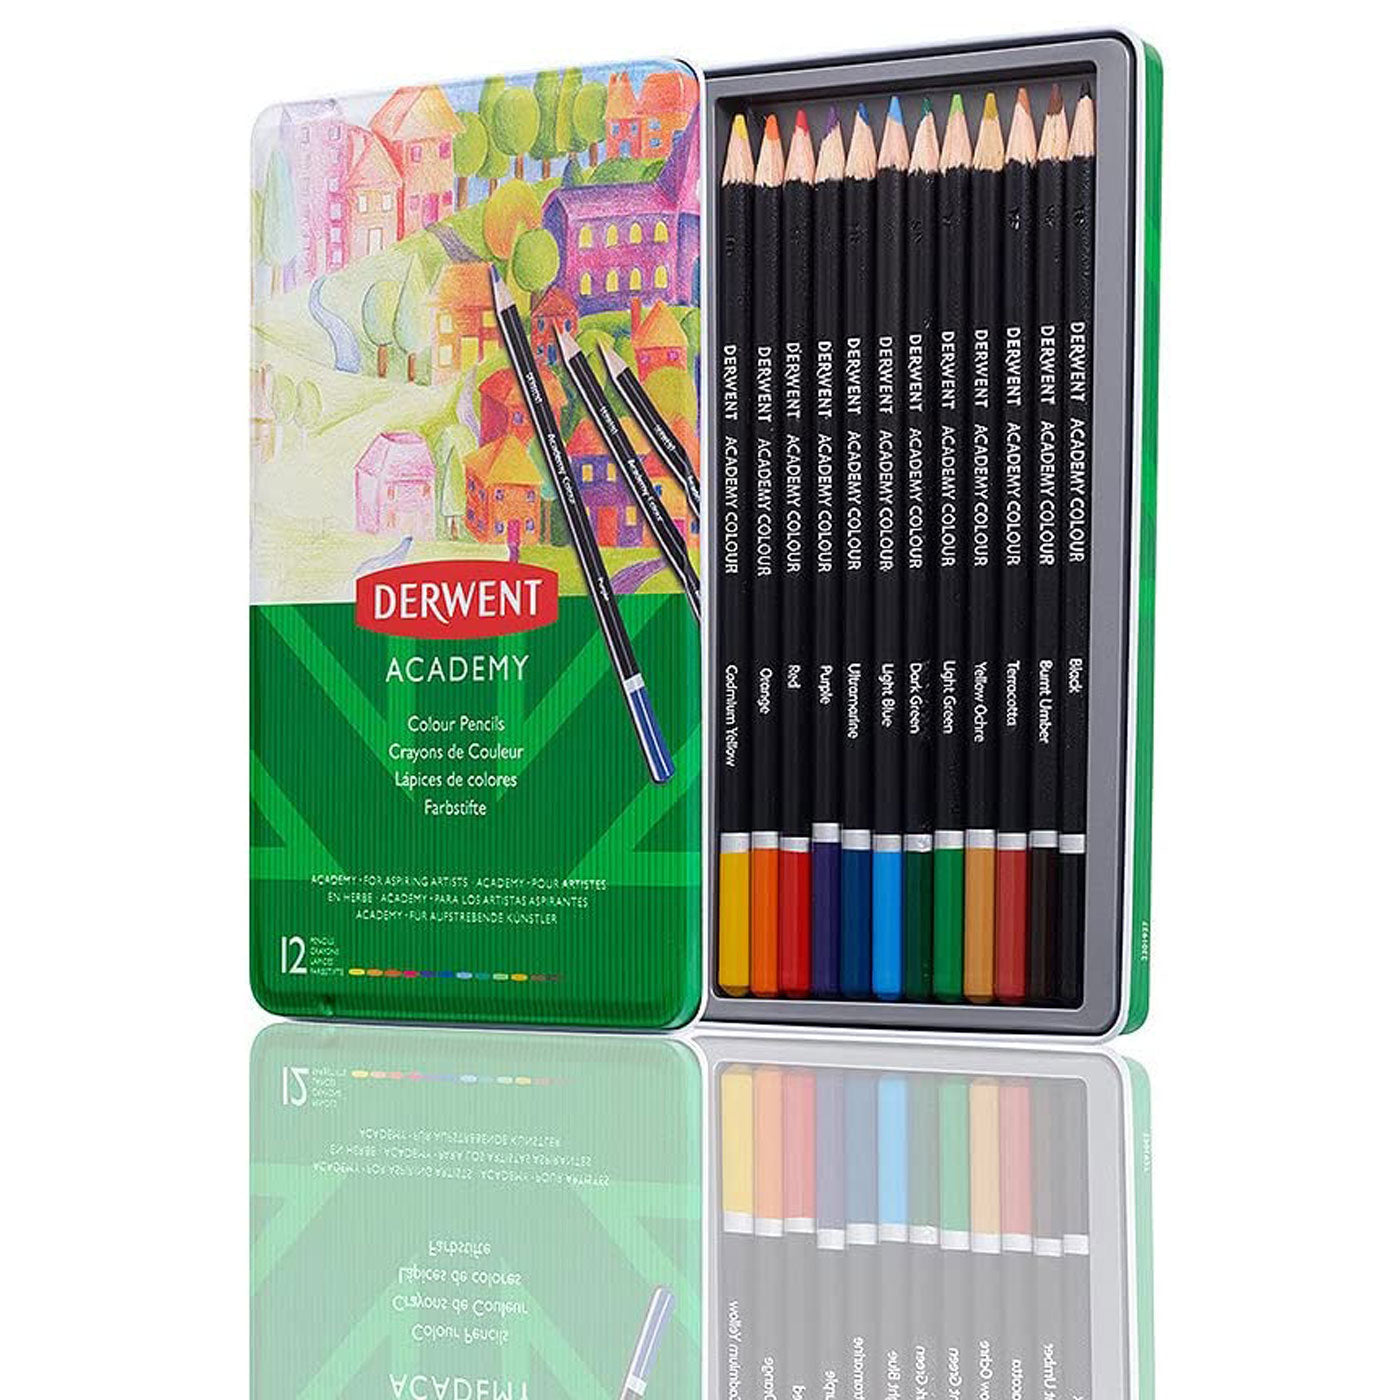 Derwent Academy Coloured Pencils Tin of 12 Shades